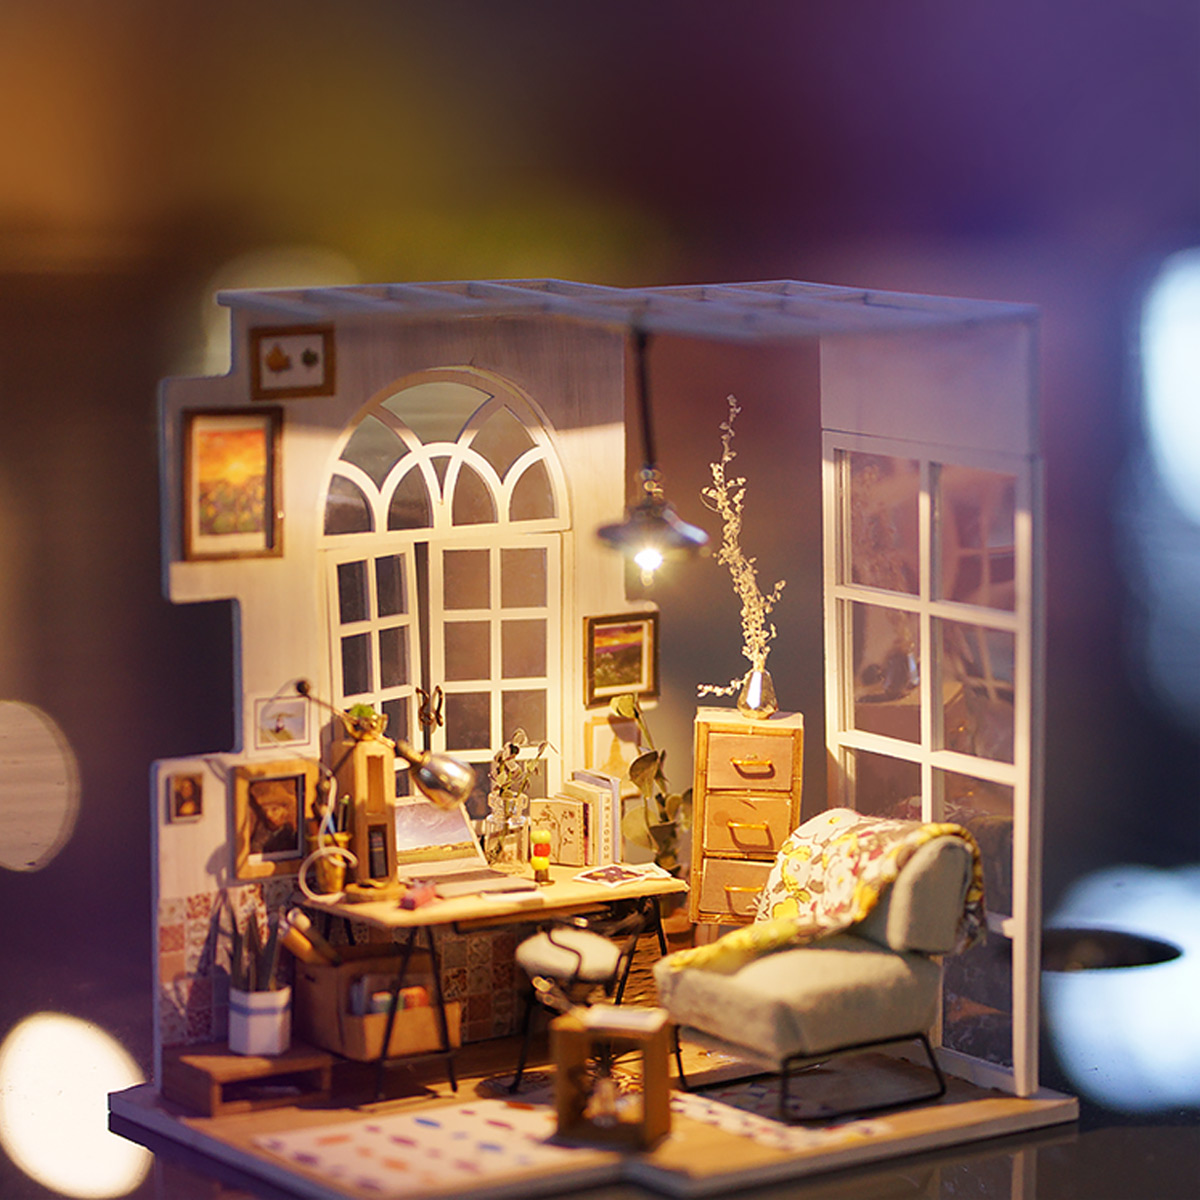 Rolife Miniature DGM01 SOHO Time as a home decor with vivid and colorful design